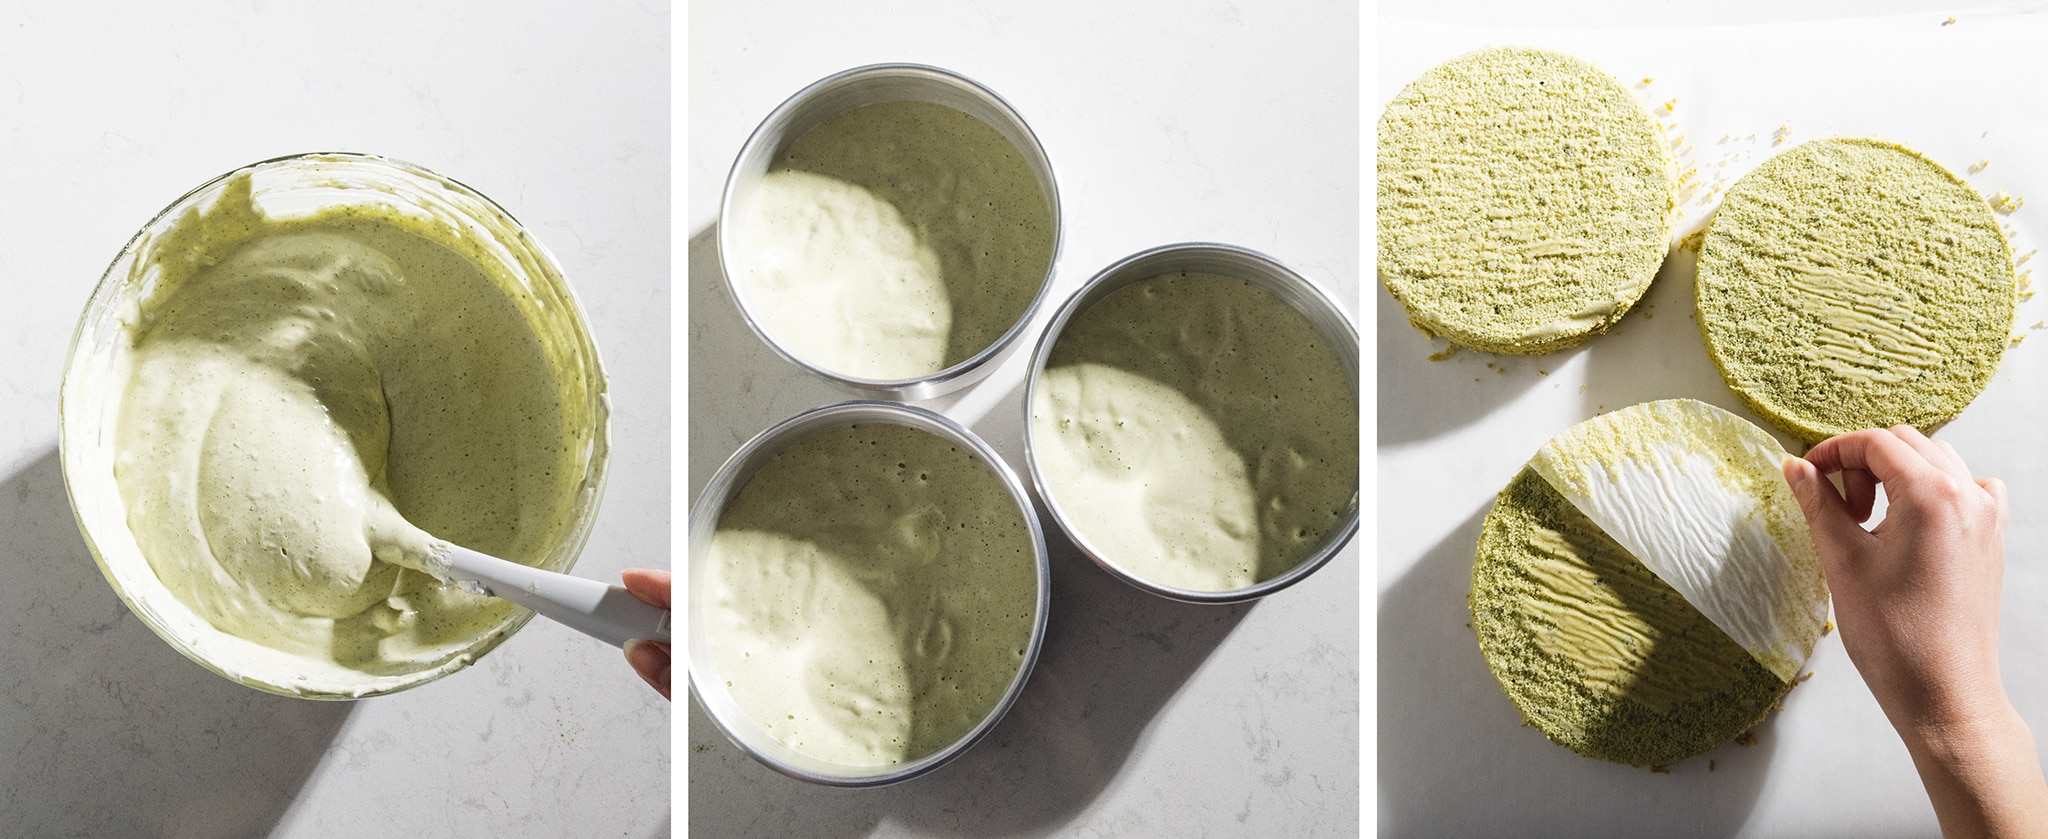 matcha sponge cake batter before and after baking